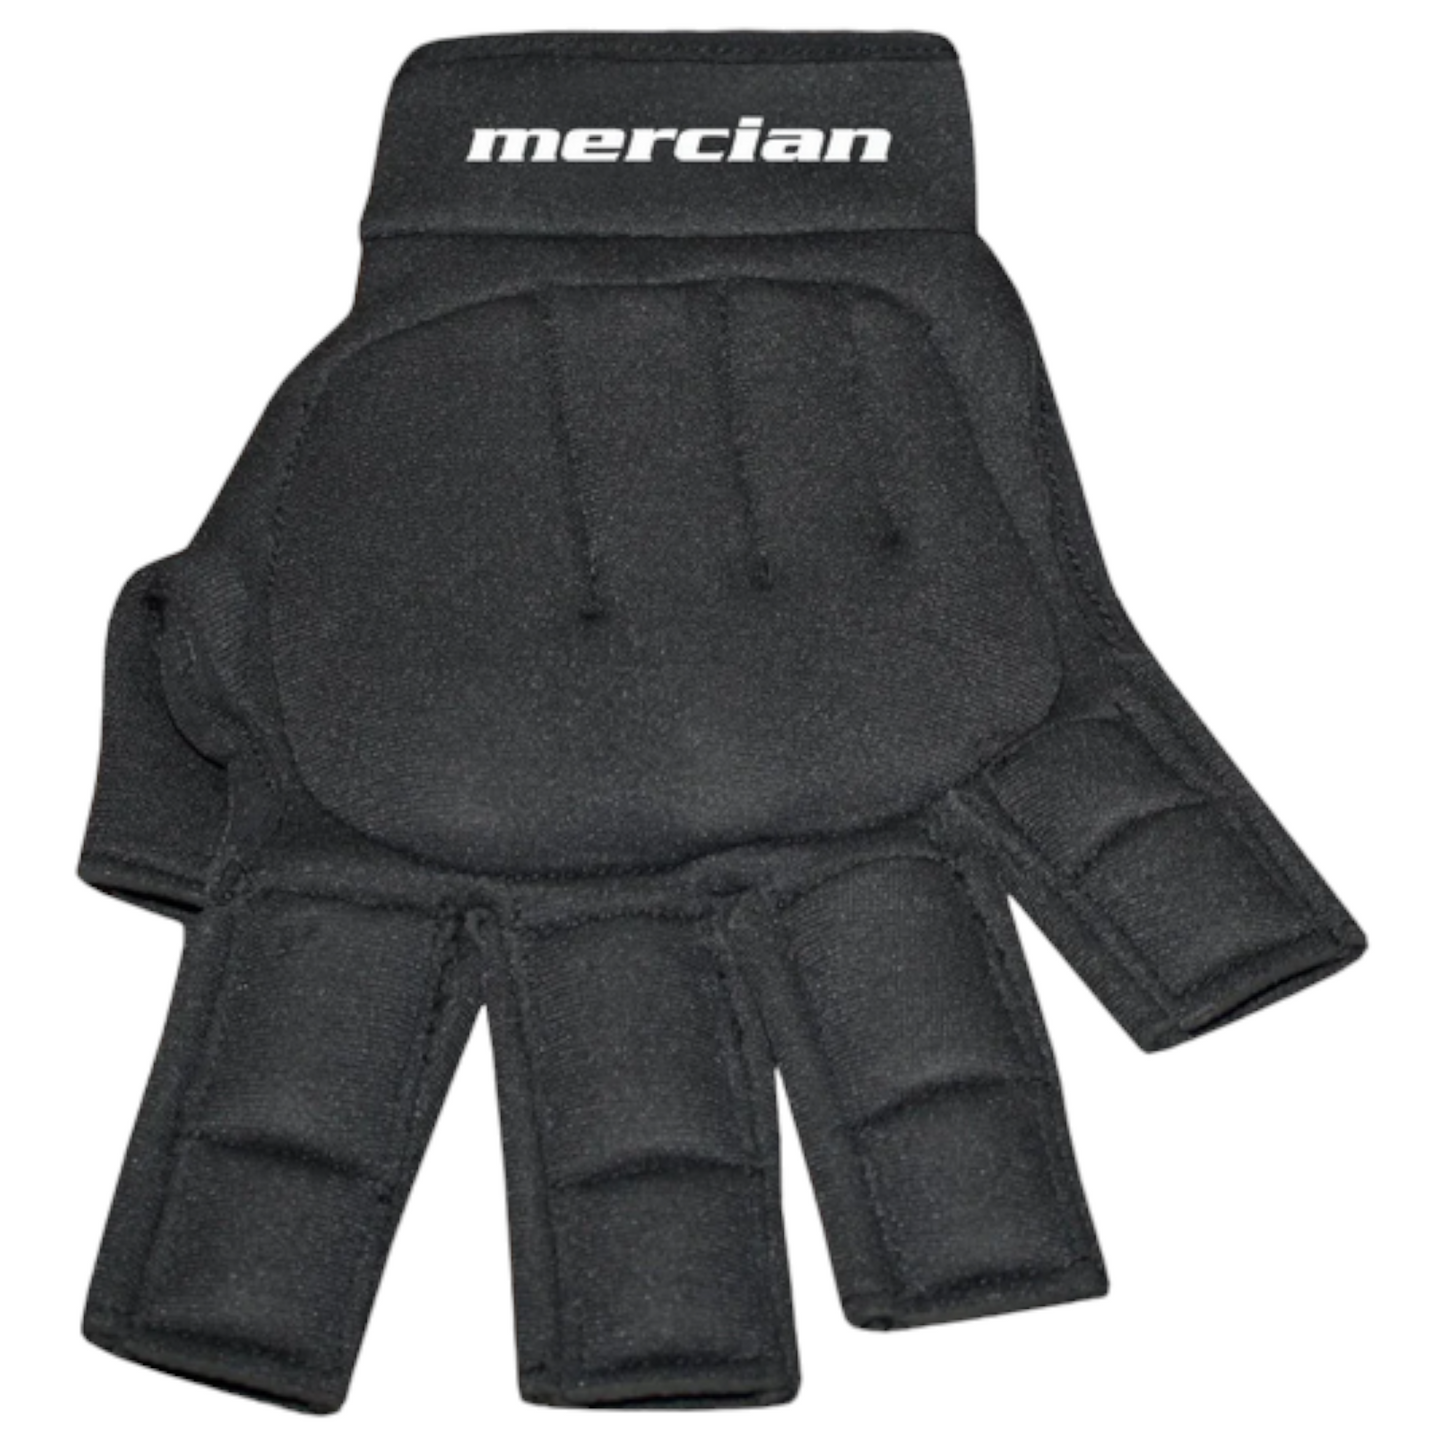 Mercian EVO 0.2 Player Glove Medium